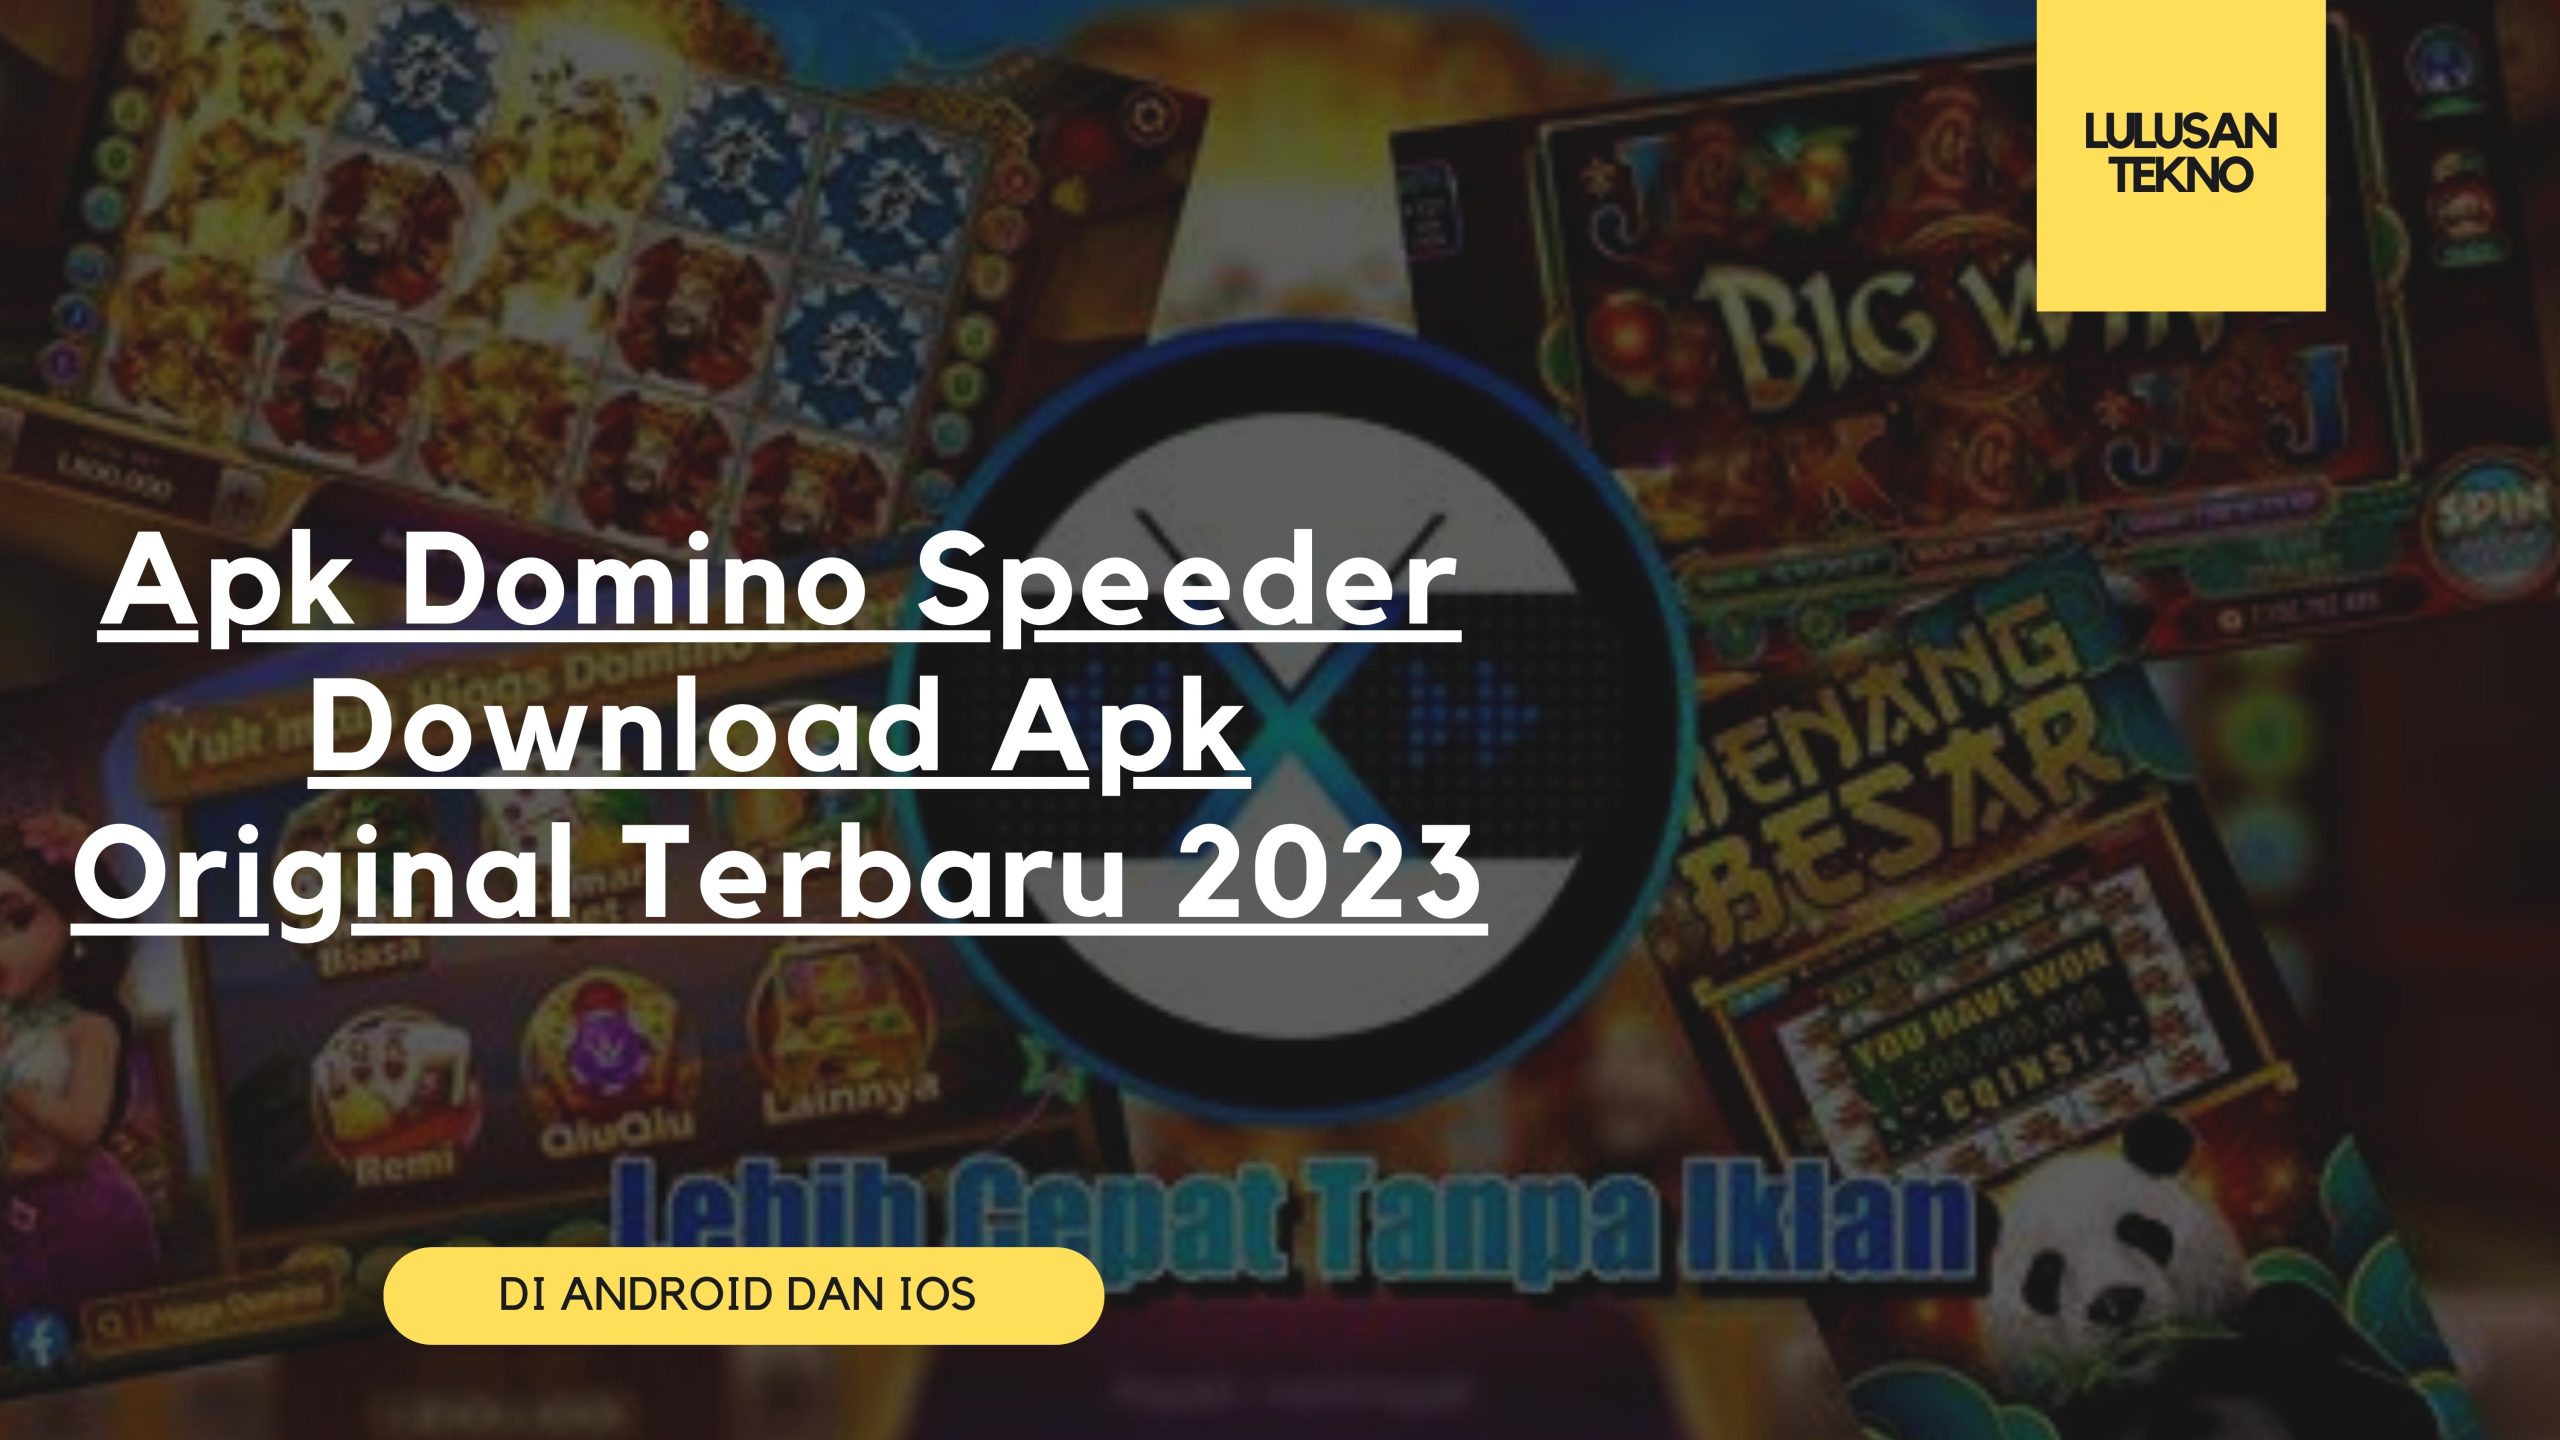 Apk Domino Speeder Download Apk Original Terbaru 2023